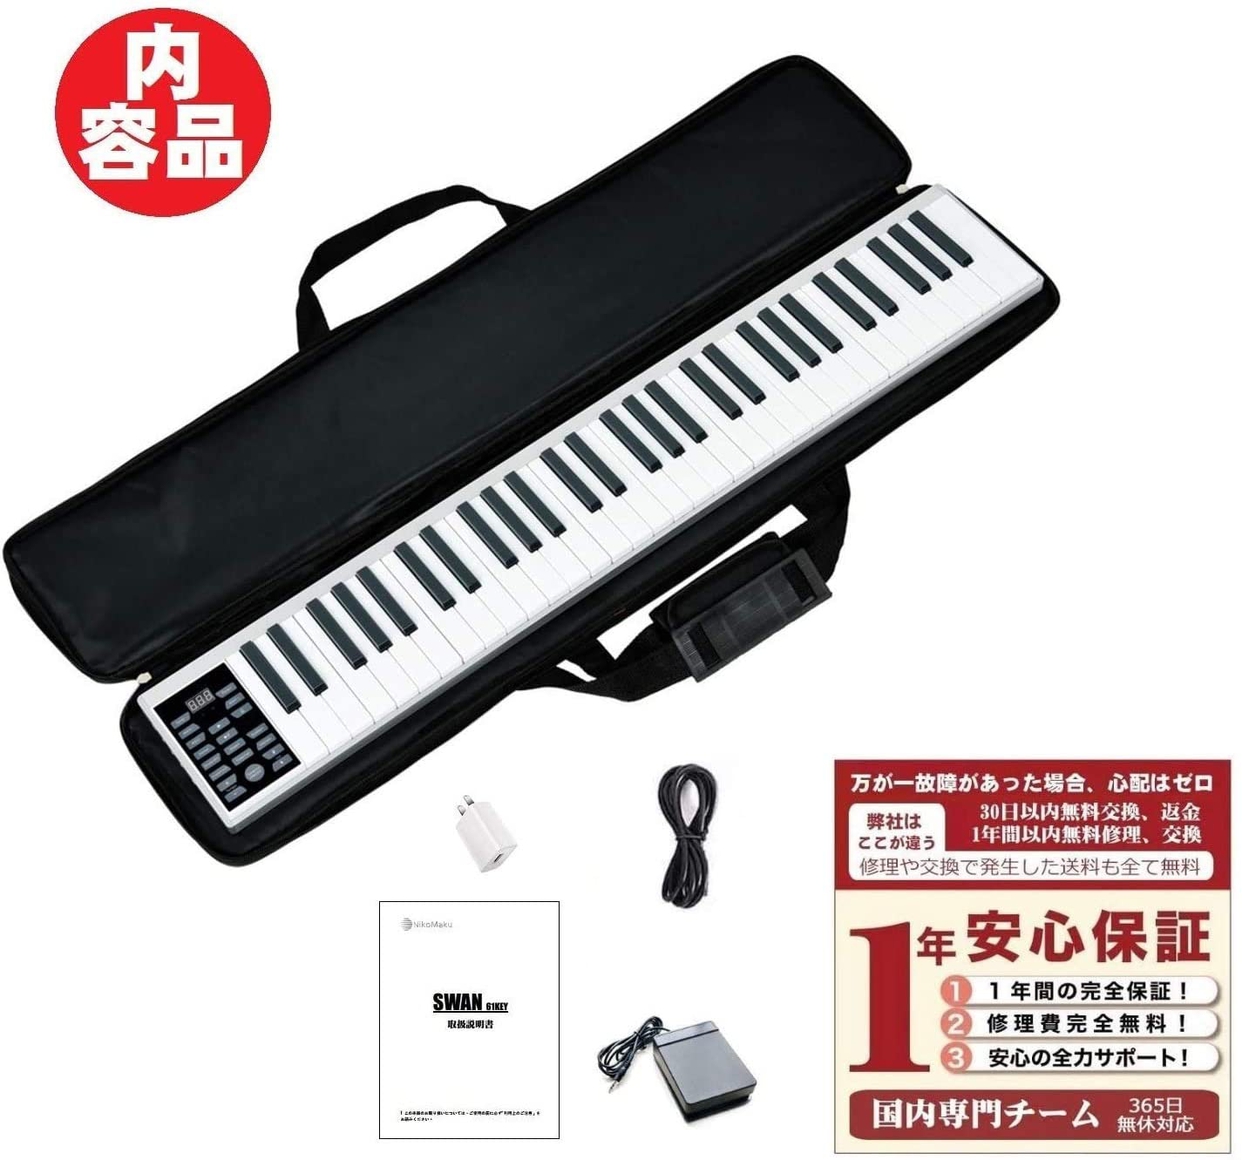 NikoMaku(ニコマク) 電子ピアノの商品画像7 